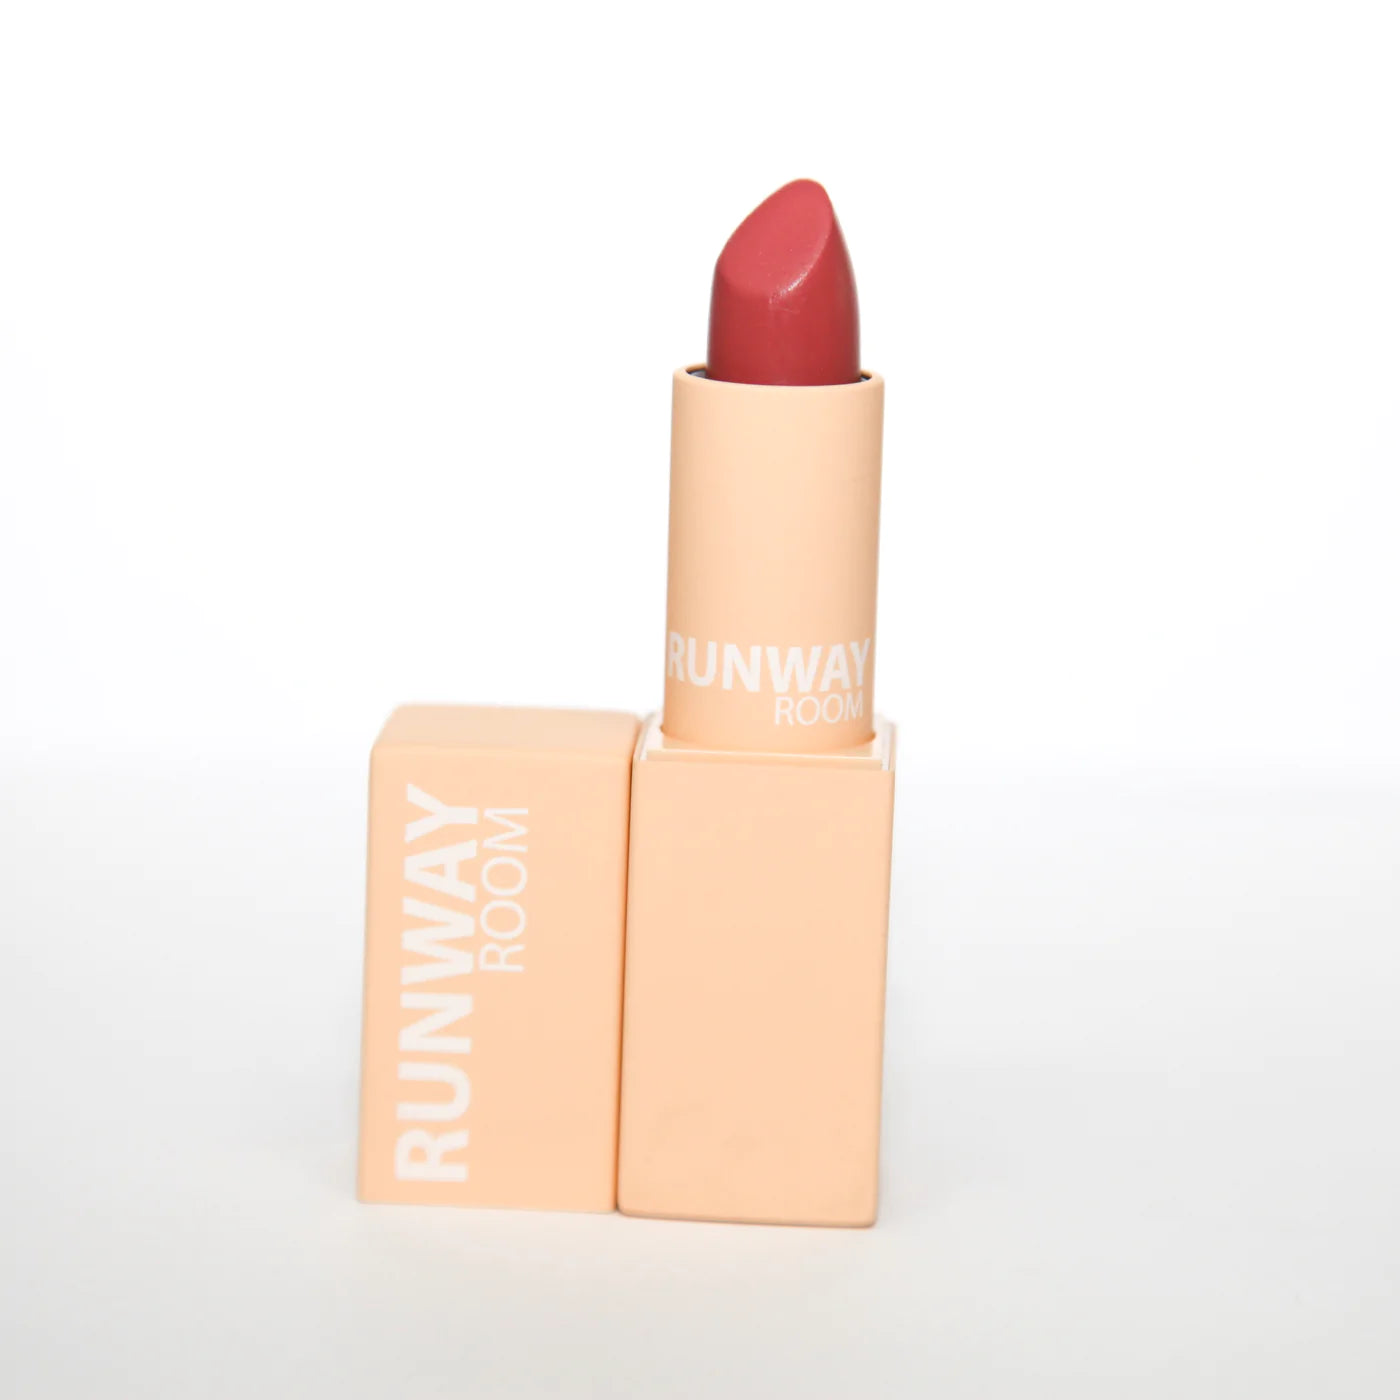 Runway Room Boss Lipstick - Rose Blush